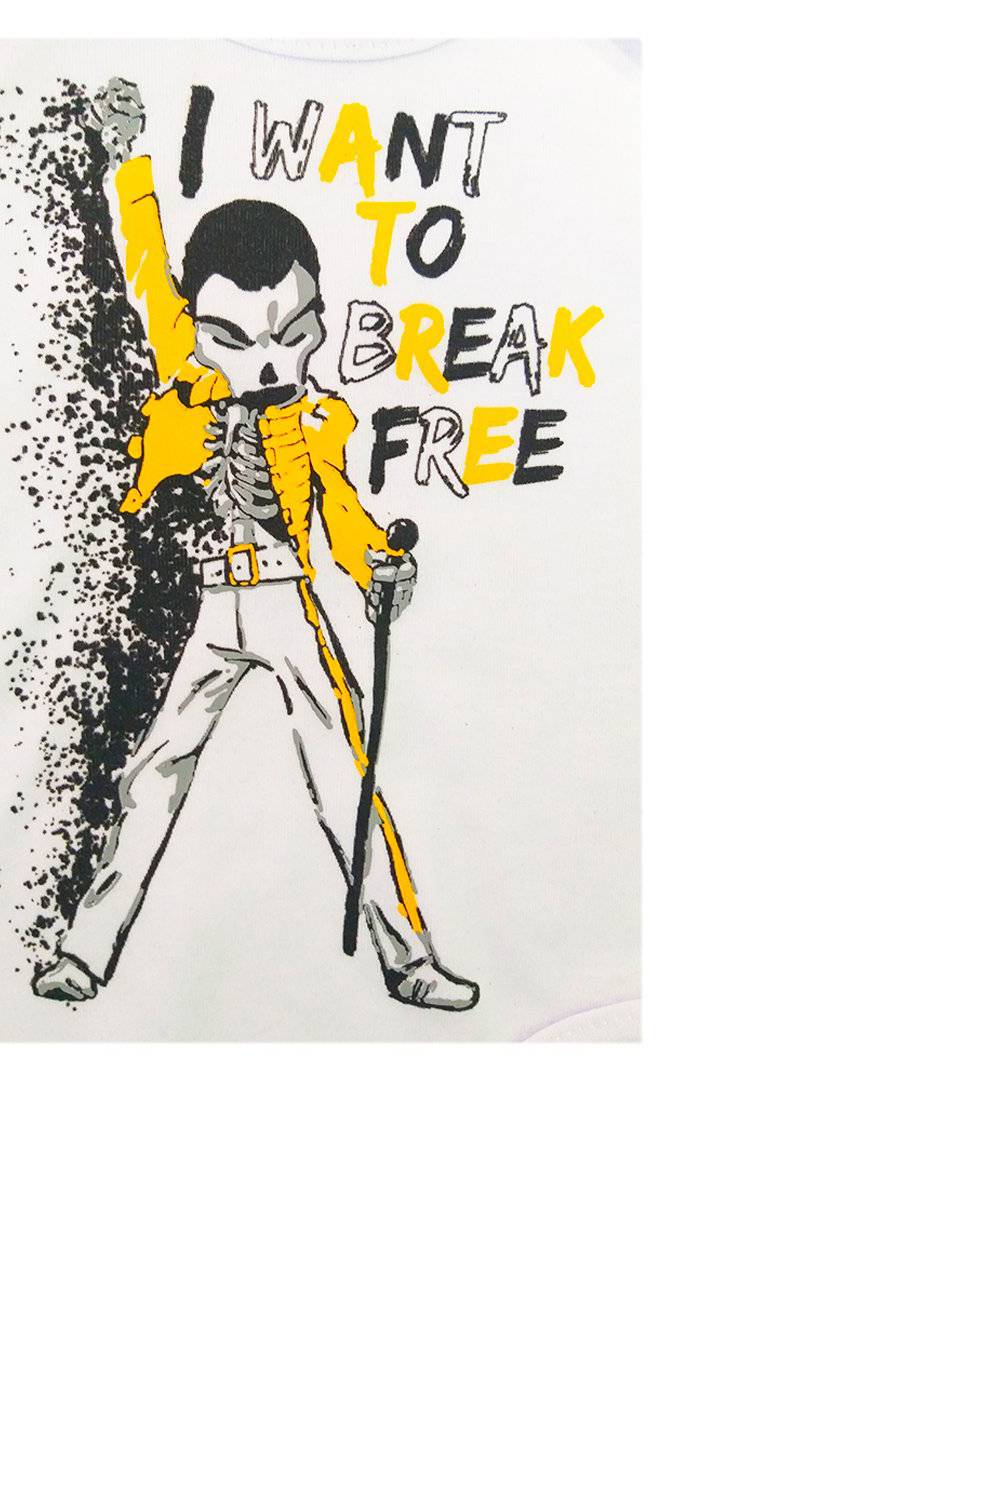 BABY ROCK - Body Manga Larga Freddie Mercury